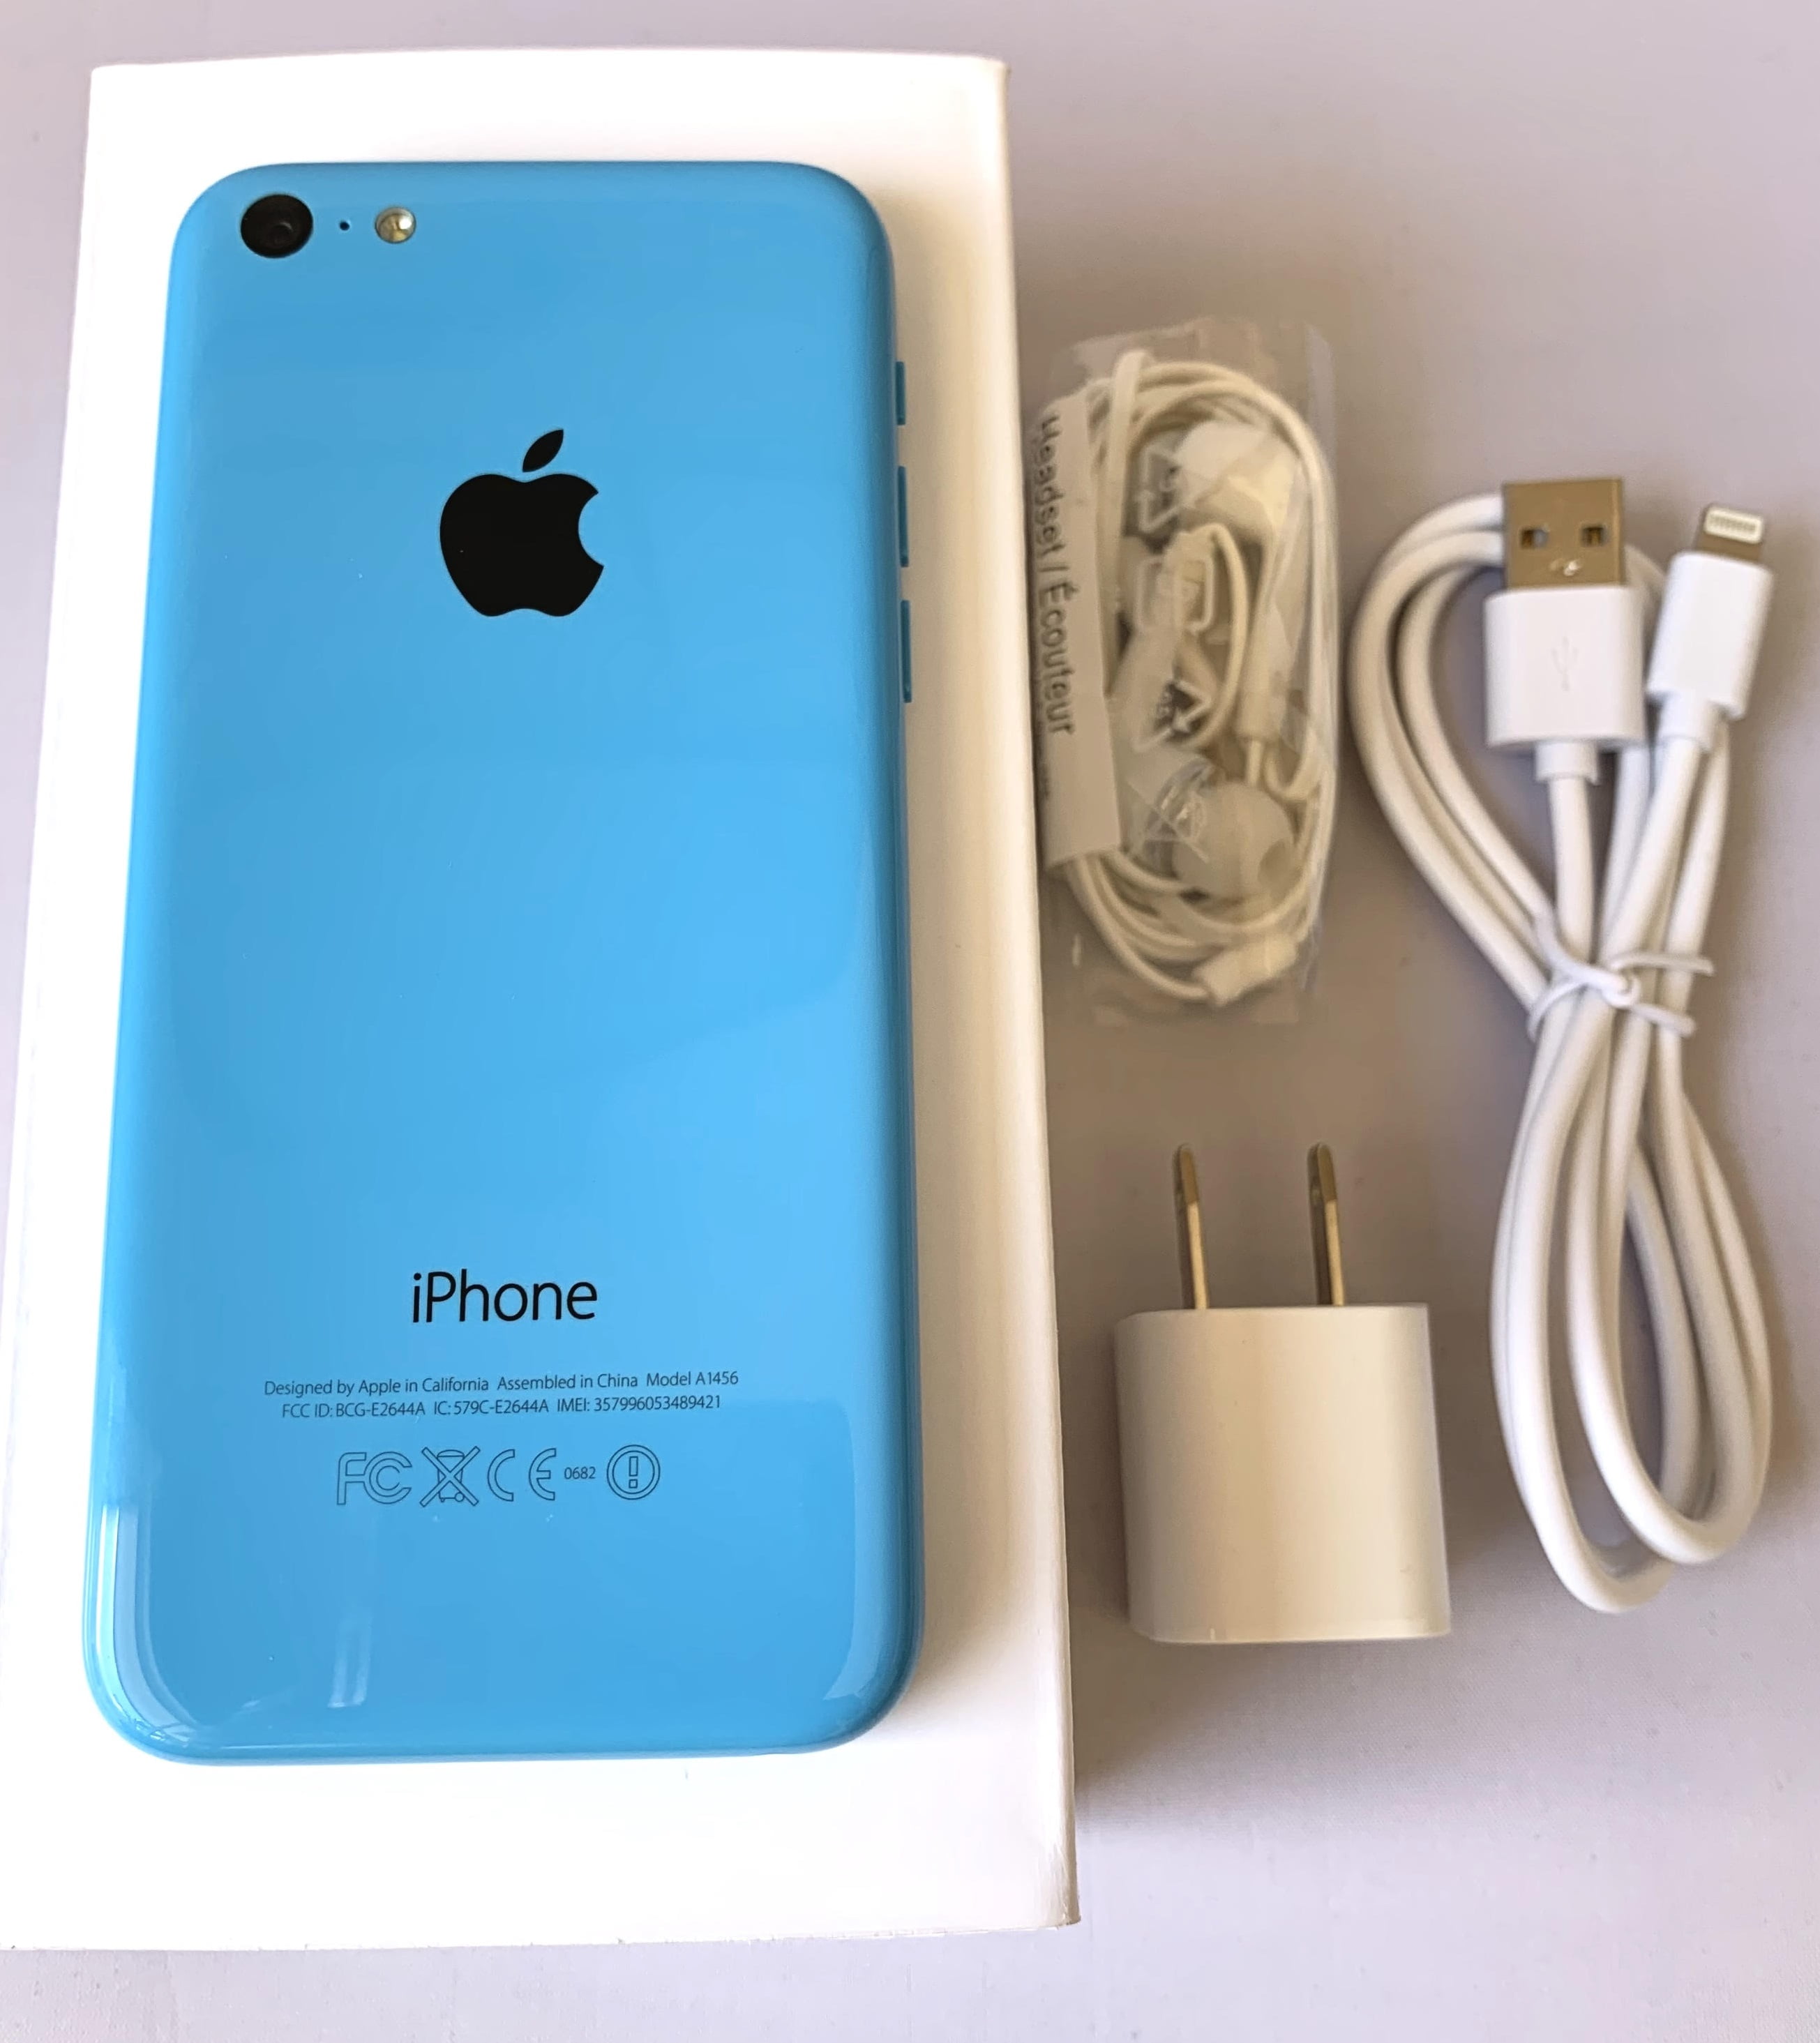 Pre-Owned Apple iPhone 32GB, Blue - Unlocked GSM (Refurbished: Good) - Walmart.com